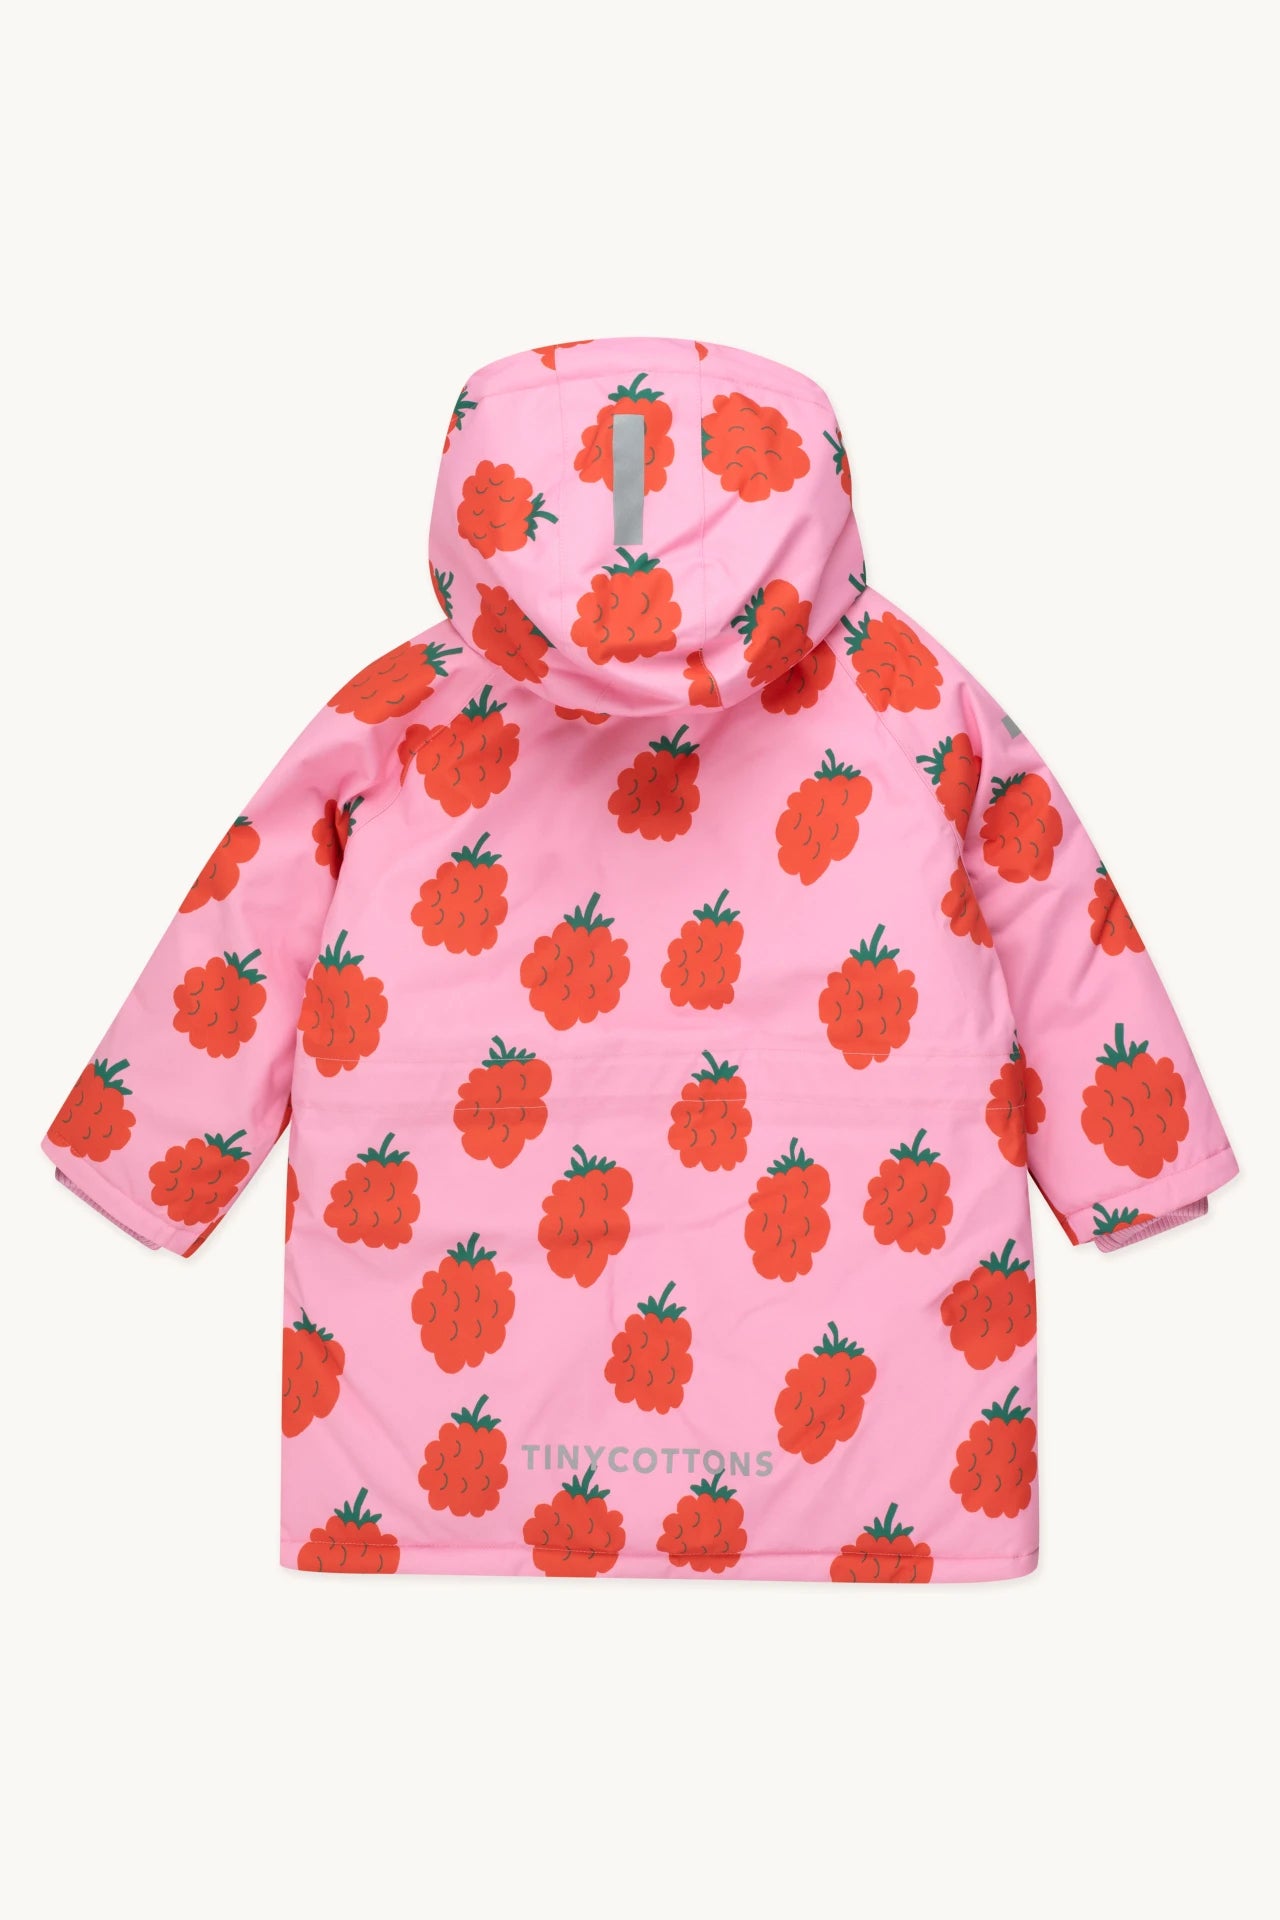 Tiny Cottons Raspberries Snow Jacket - pink